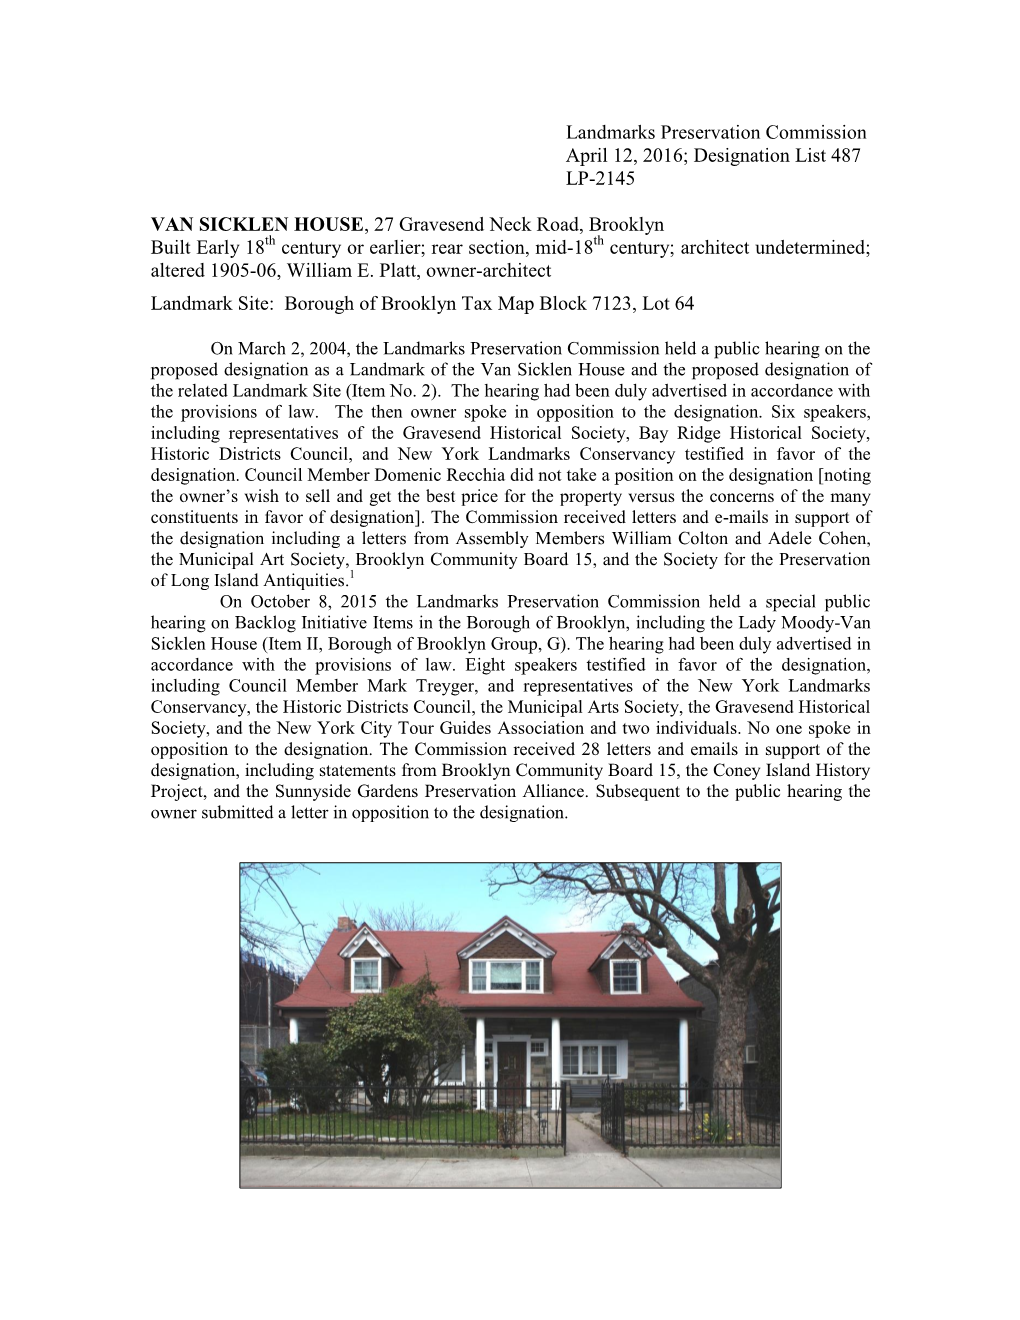 Landmarks Preservation Commission April 12, 2016; Designation List 487 LP-2145